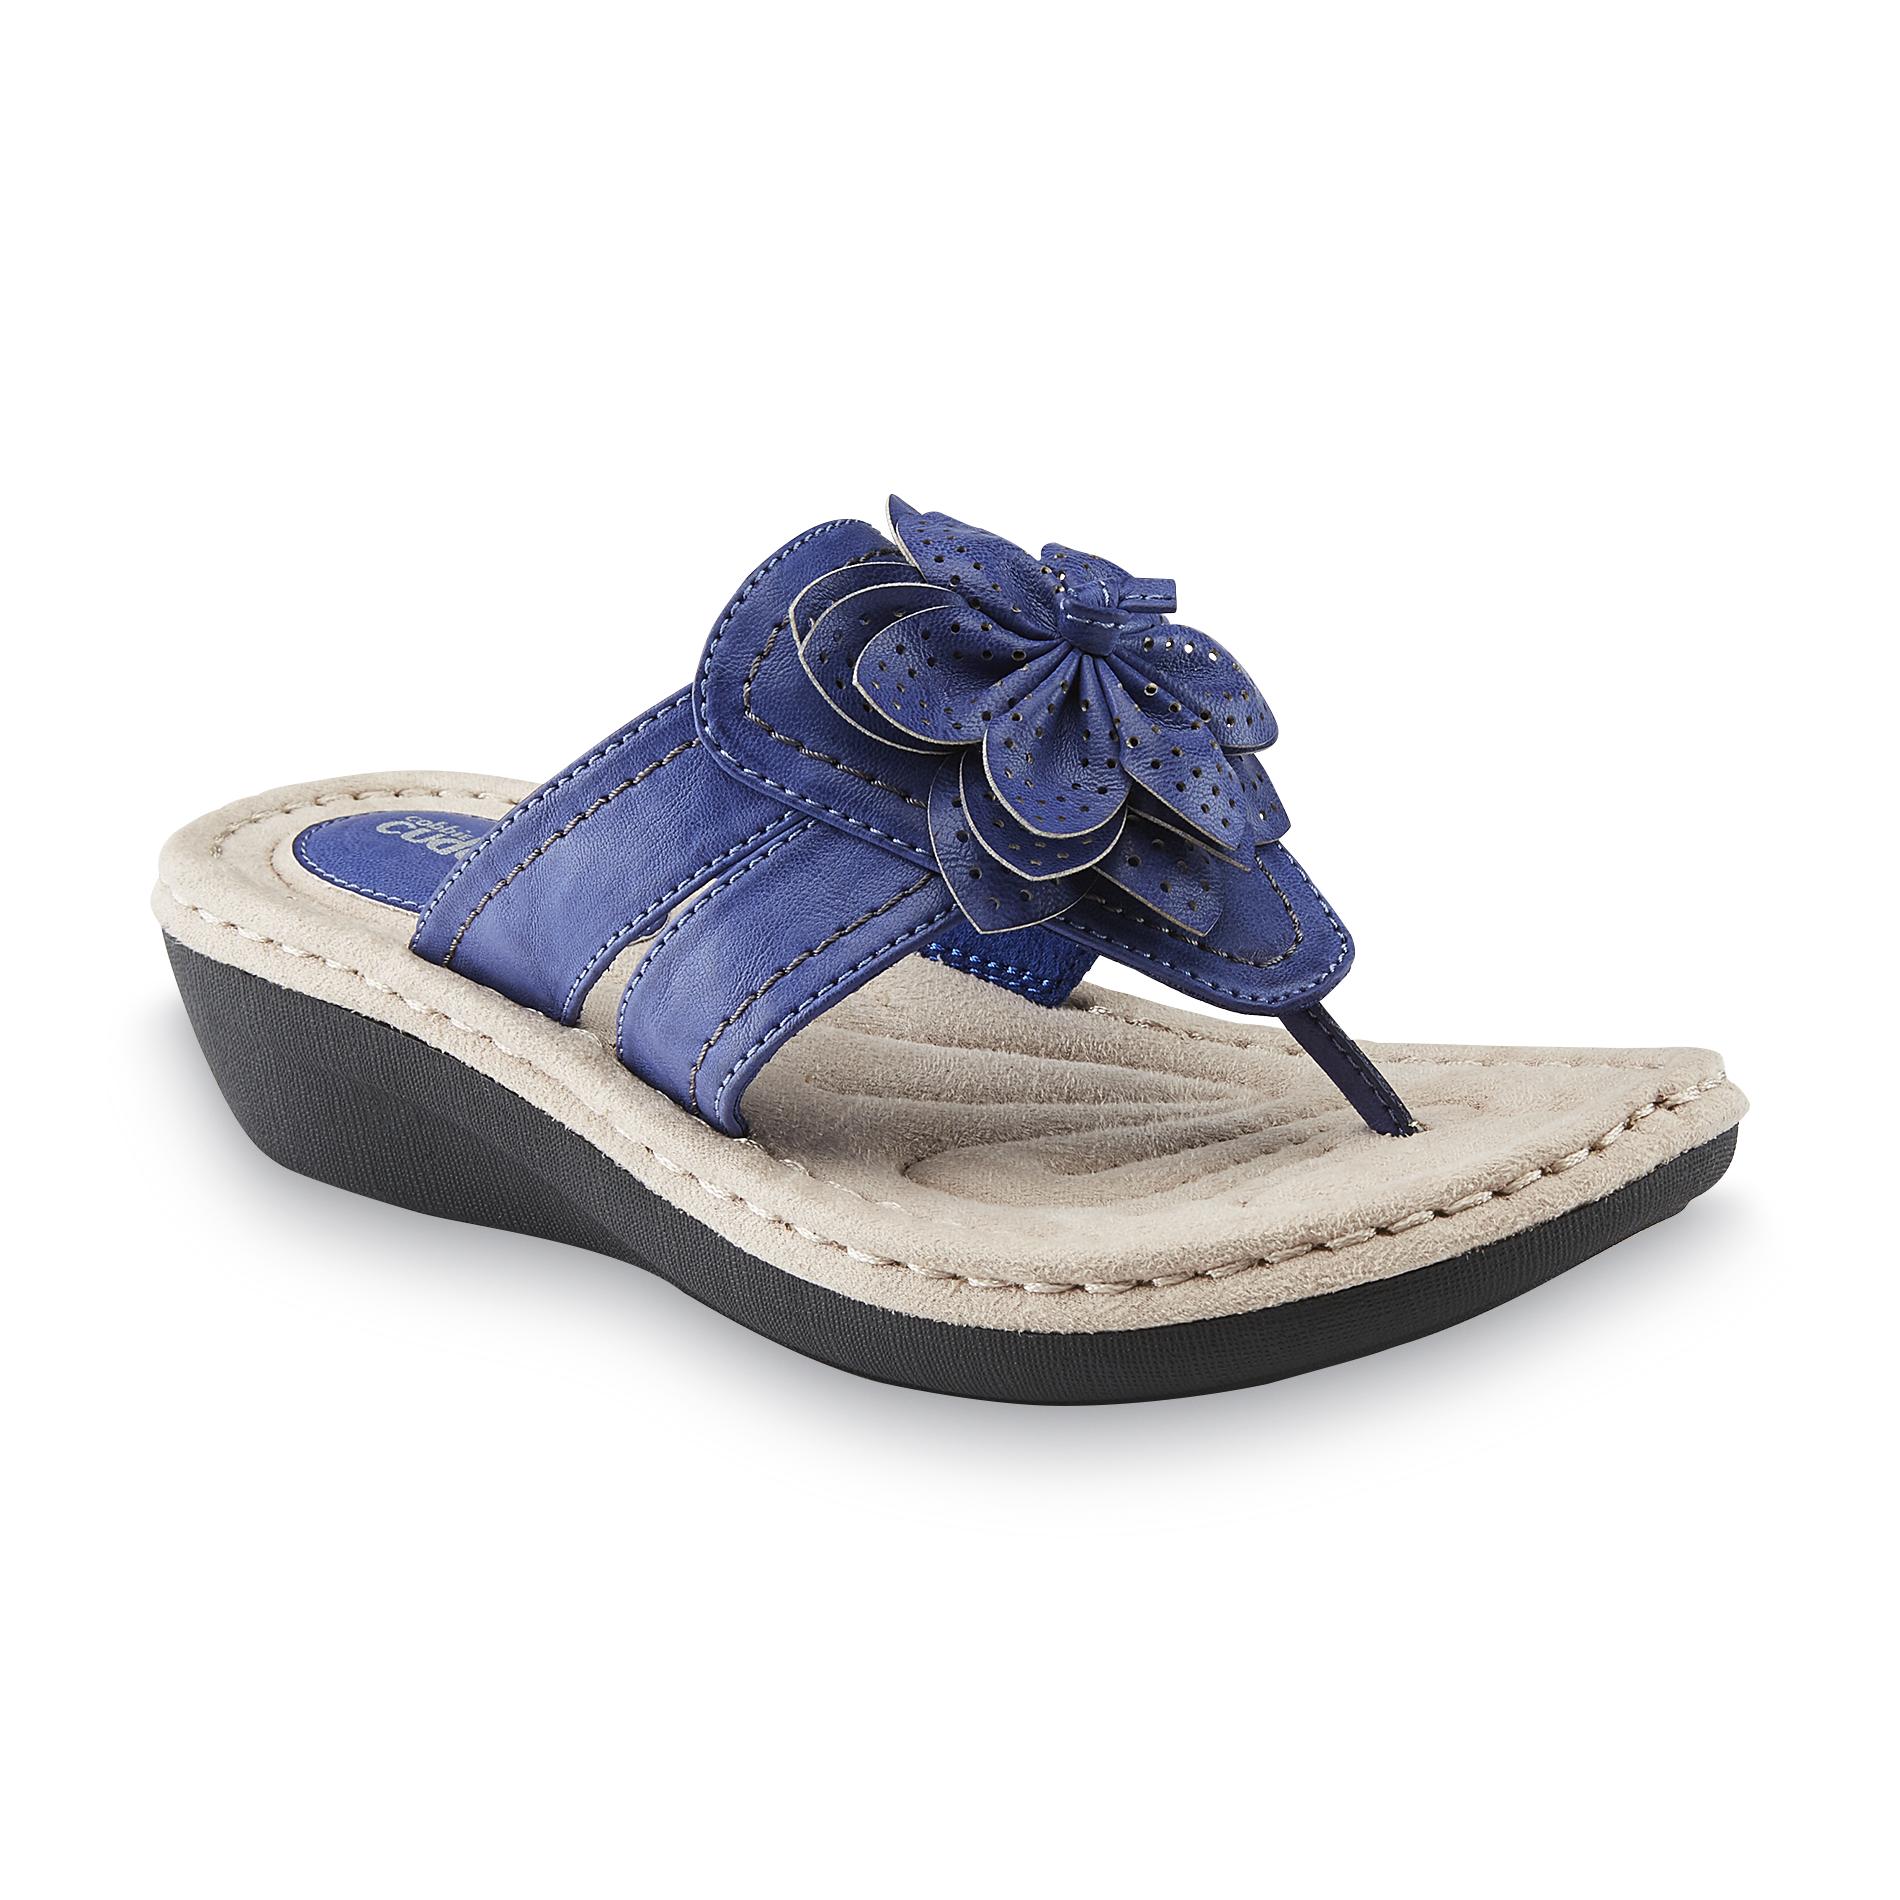 Cobbie Cuddlers Women's Reginy Blue Thong Comfort Sandal - Wide Width ...